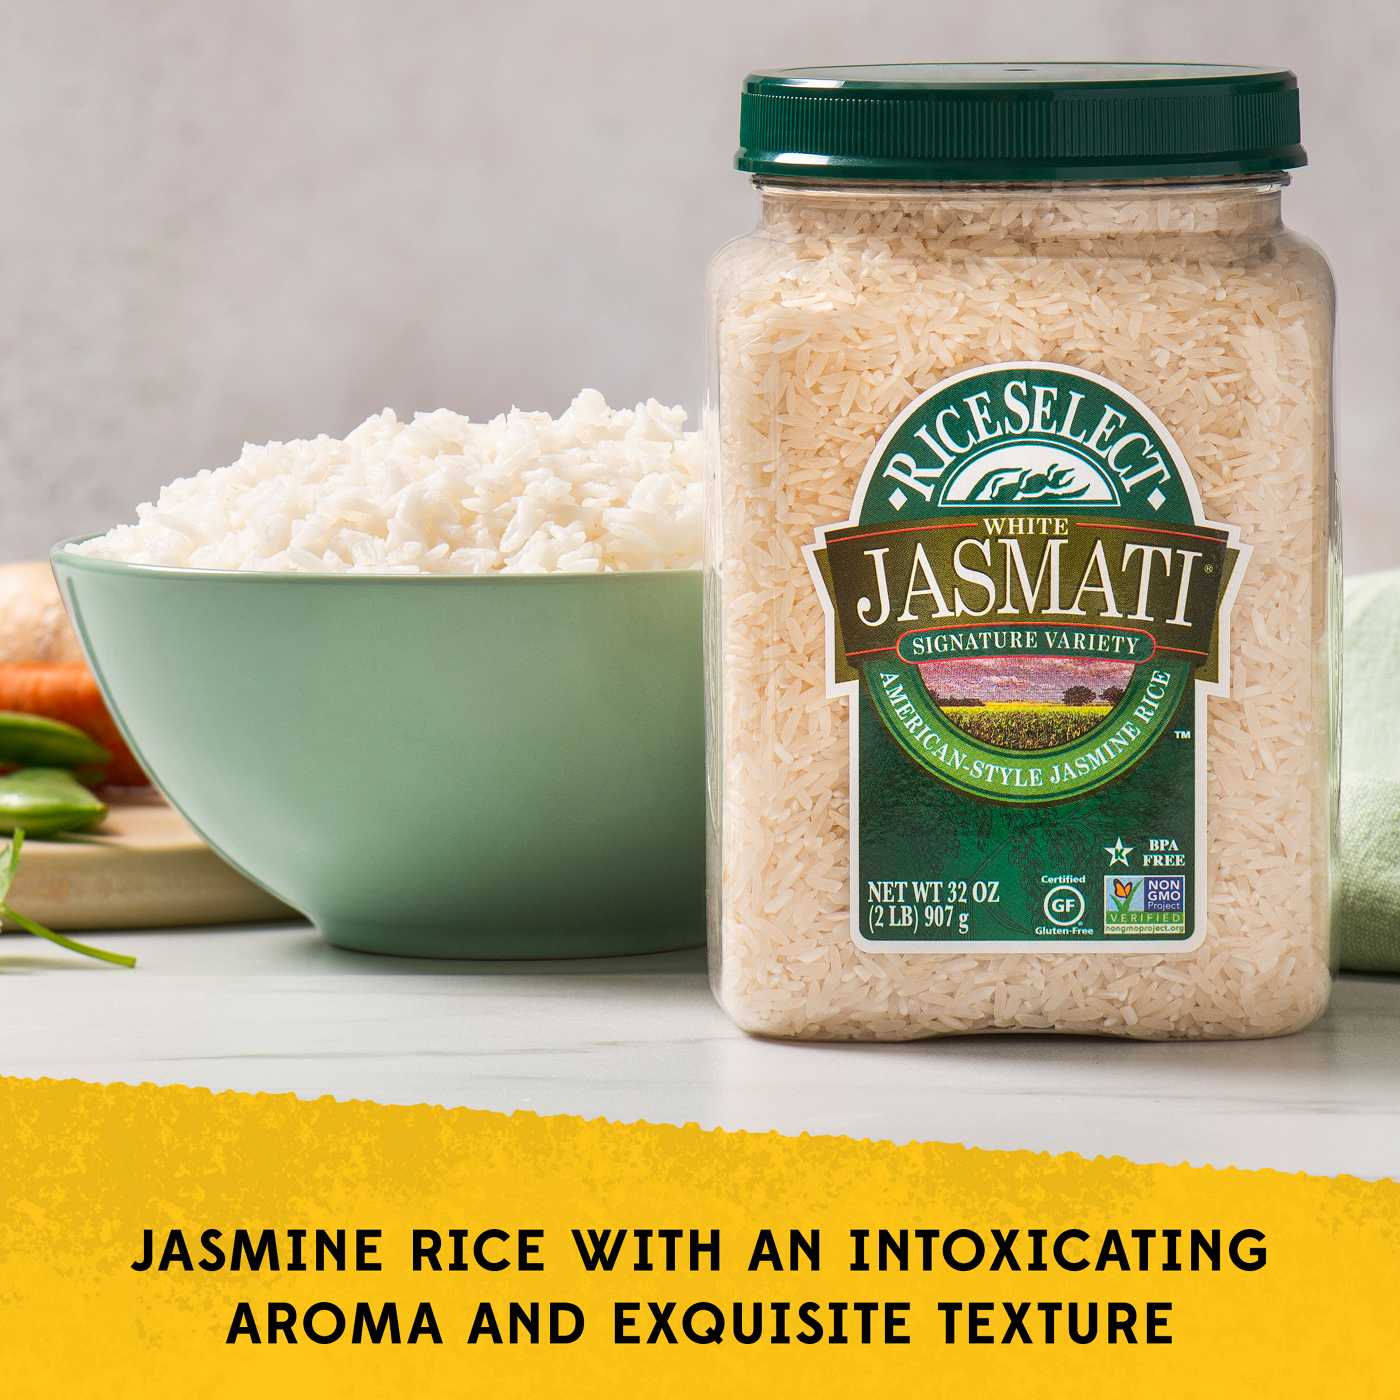 RiceSelect Jasmati Long Grain Jasmine Rice; image 3 of 5